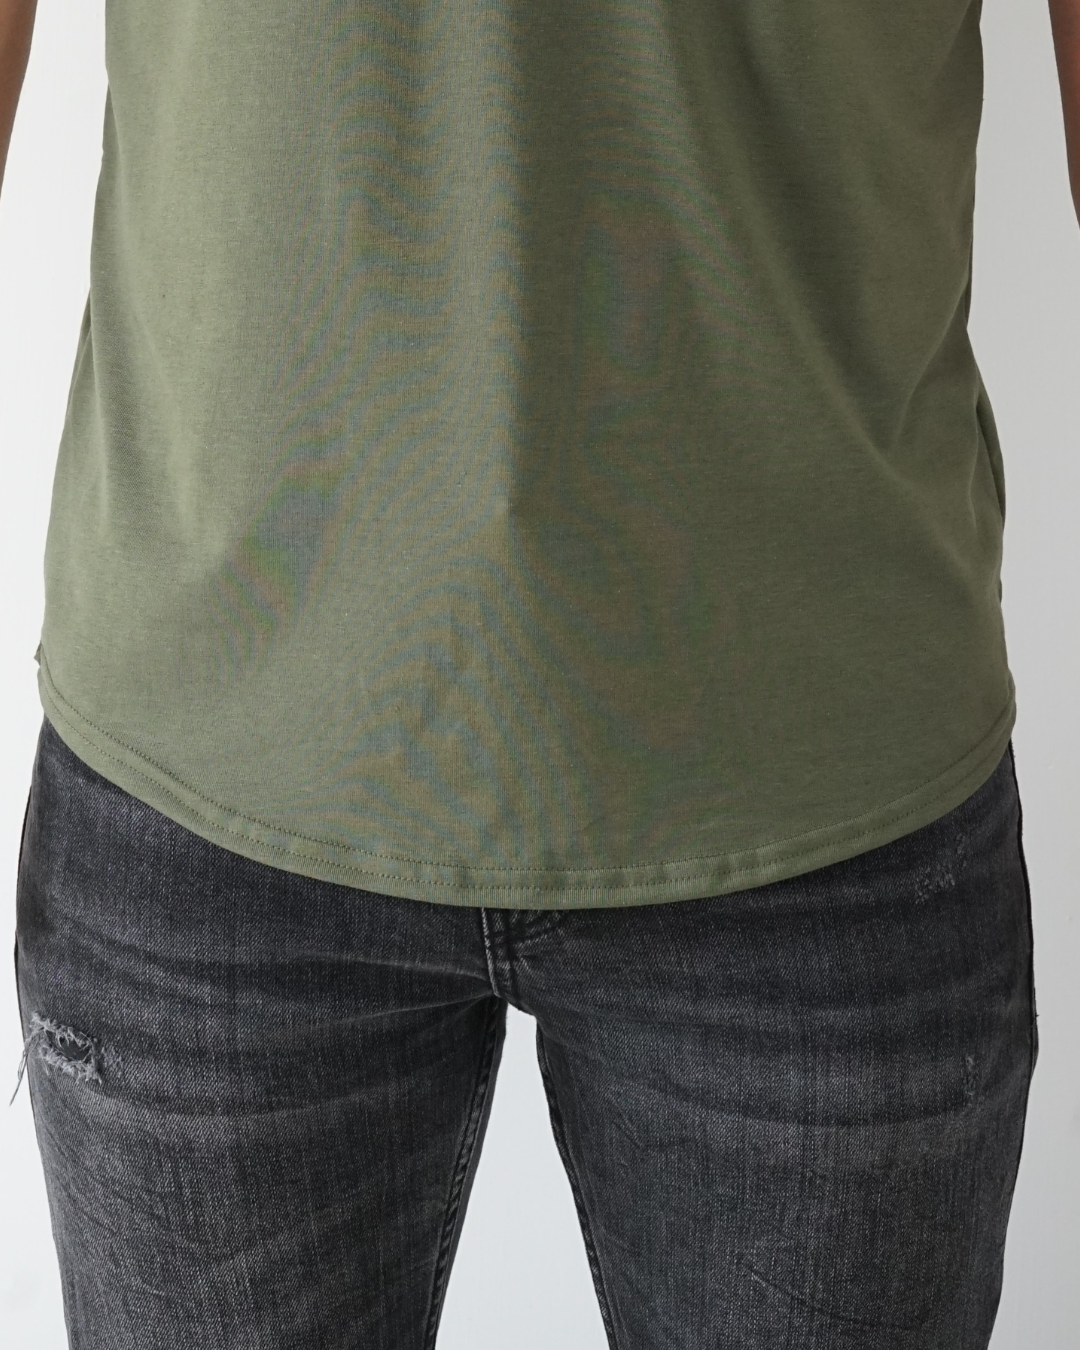 Musk Green T-shirt - Short Sleeve Crew Neck Curved Bottom